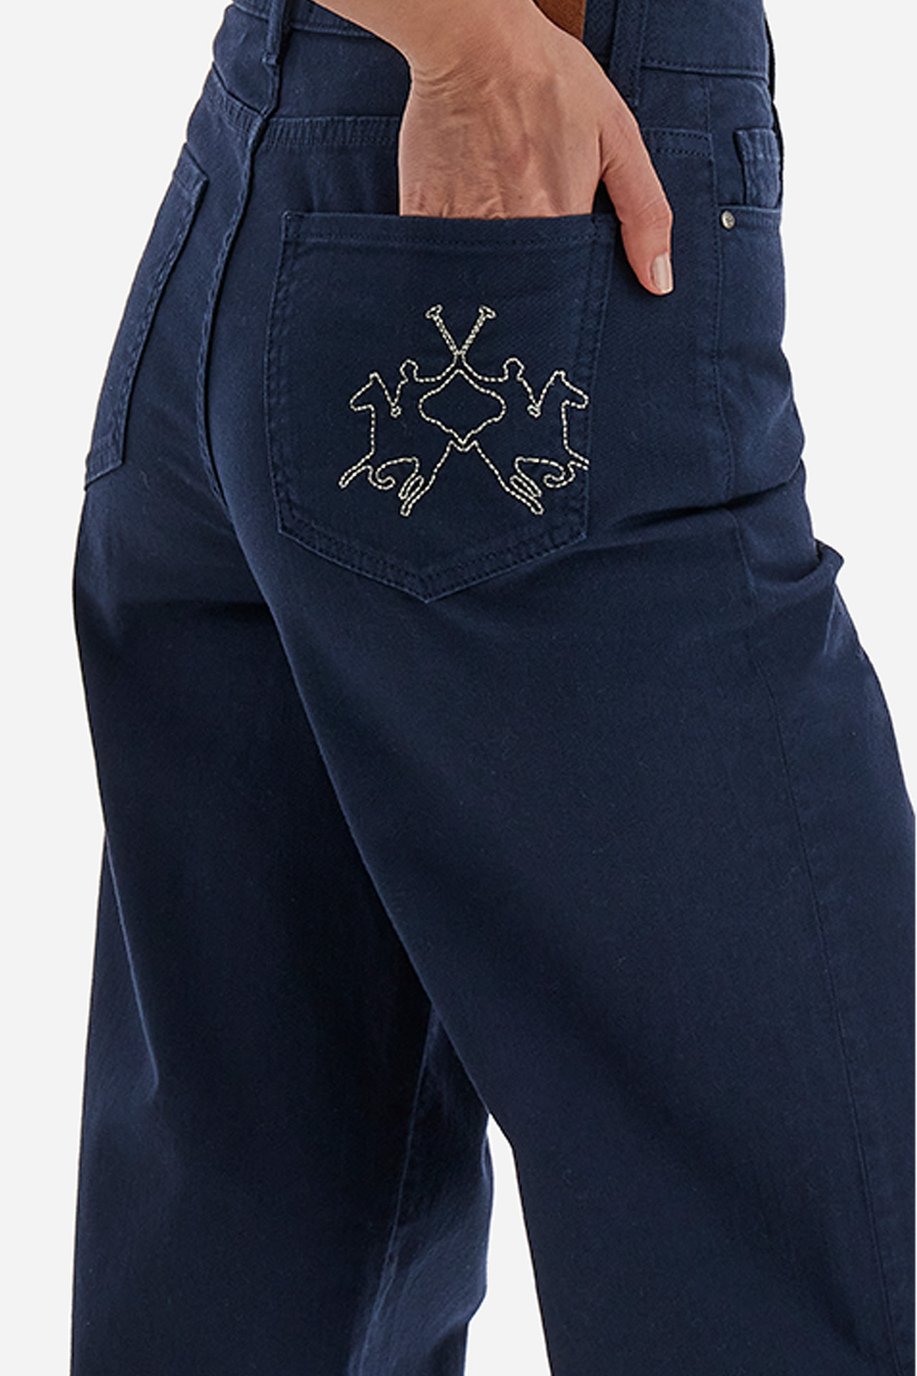 Women's 5-pocket jeans trousers in solid color Spring Weekend - Villard - Apparel | La Martina - Official Online Shop